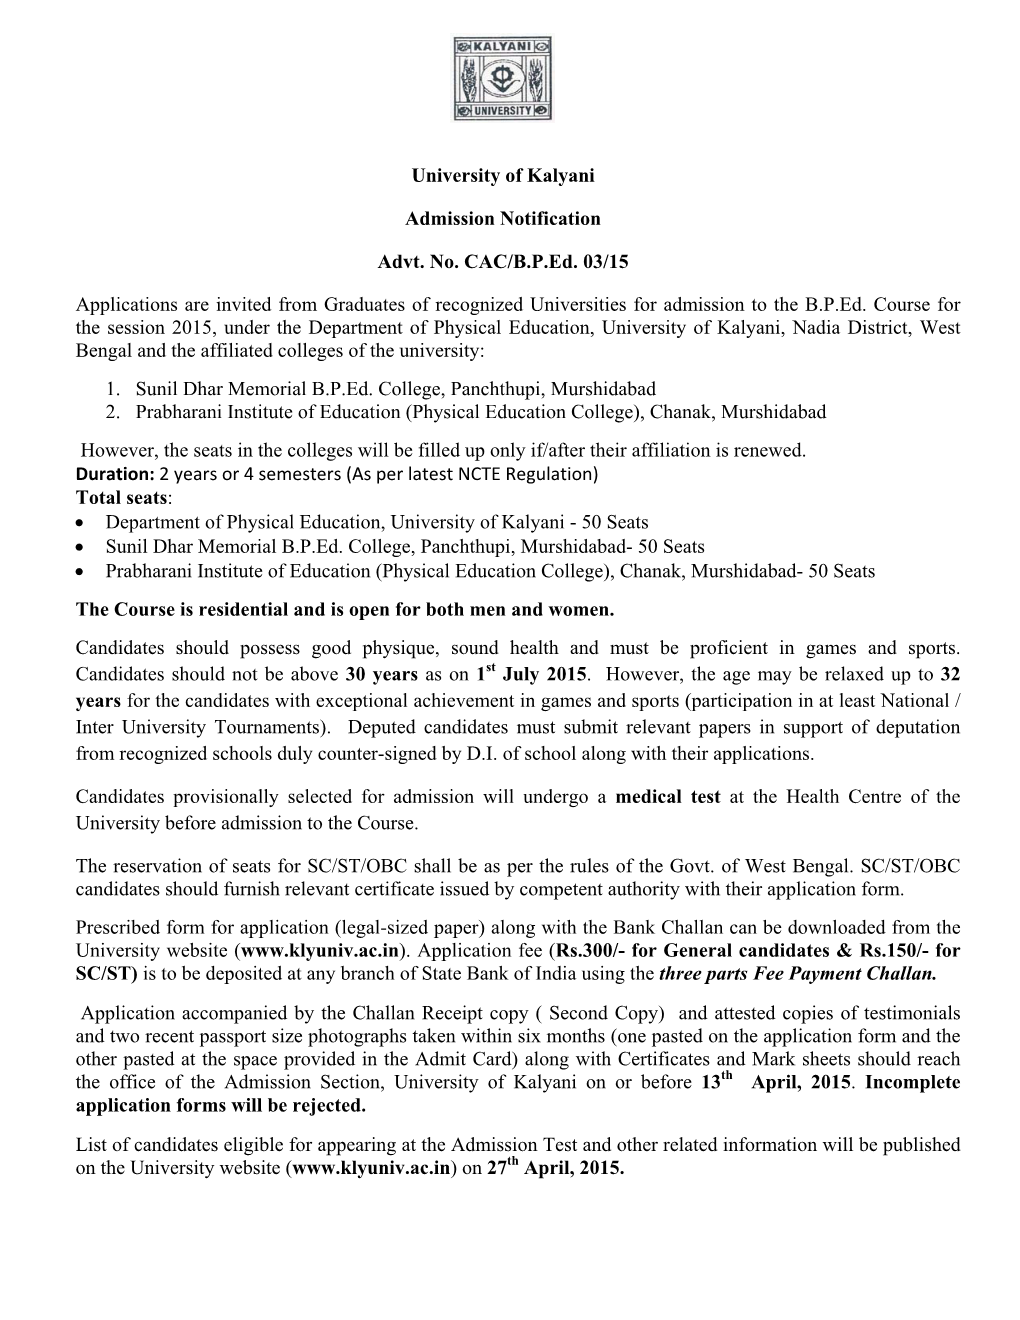 University of Kalyani Admission Notification Advt. No. CAC/B.P.Ed